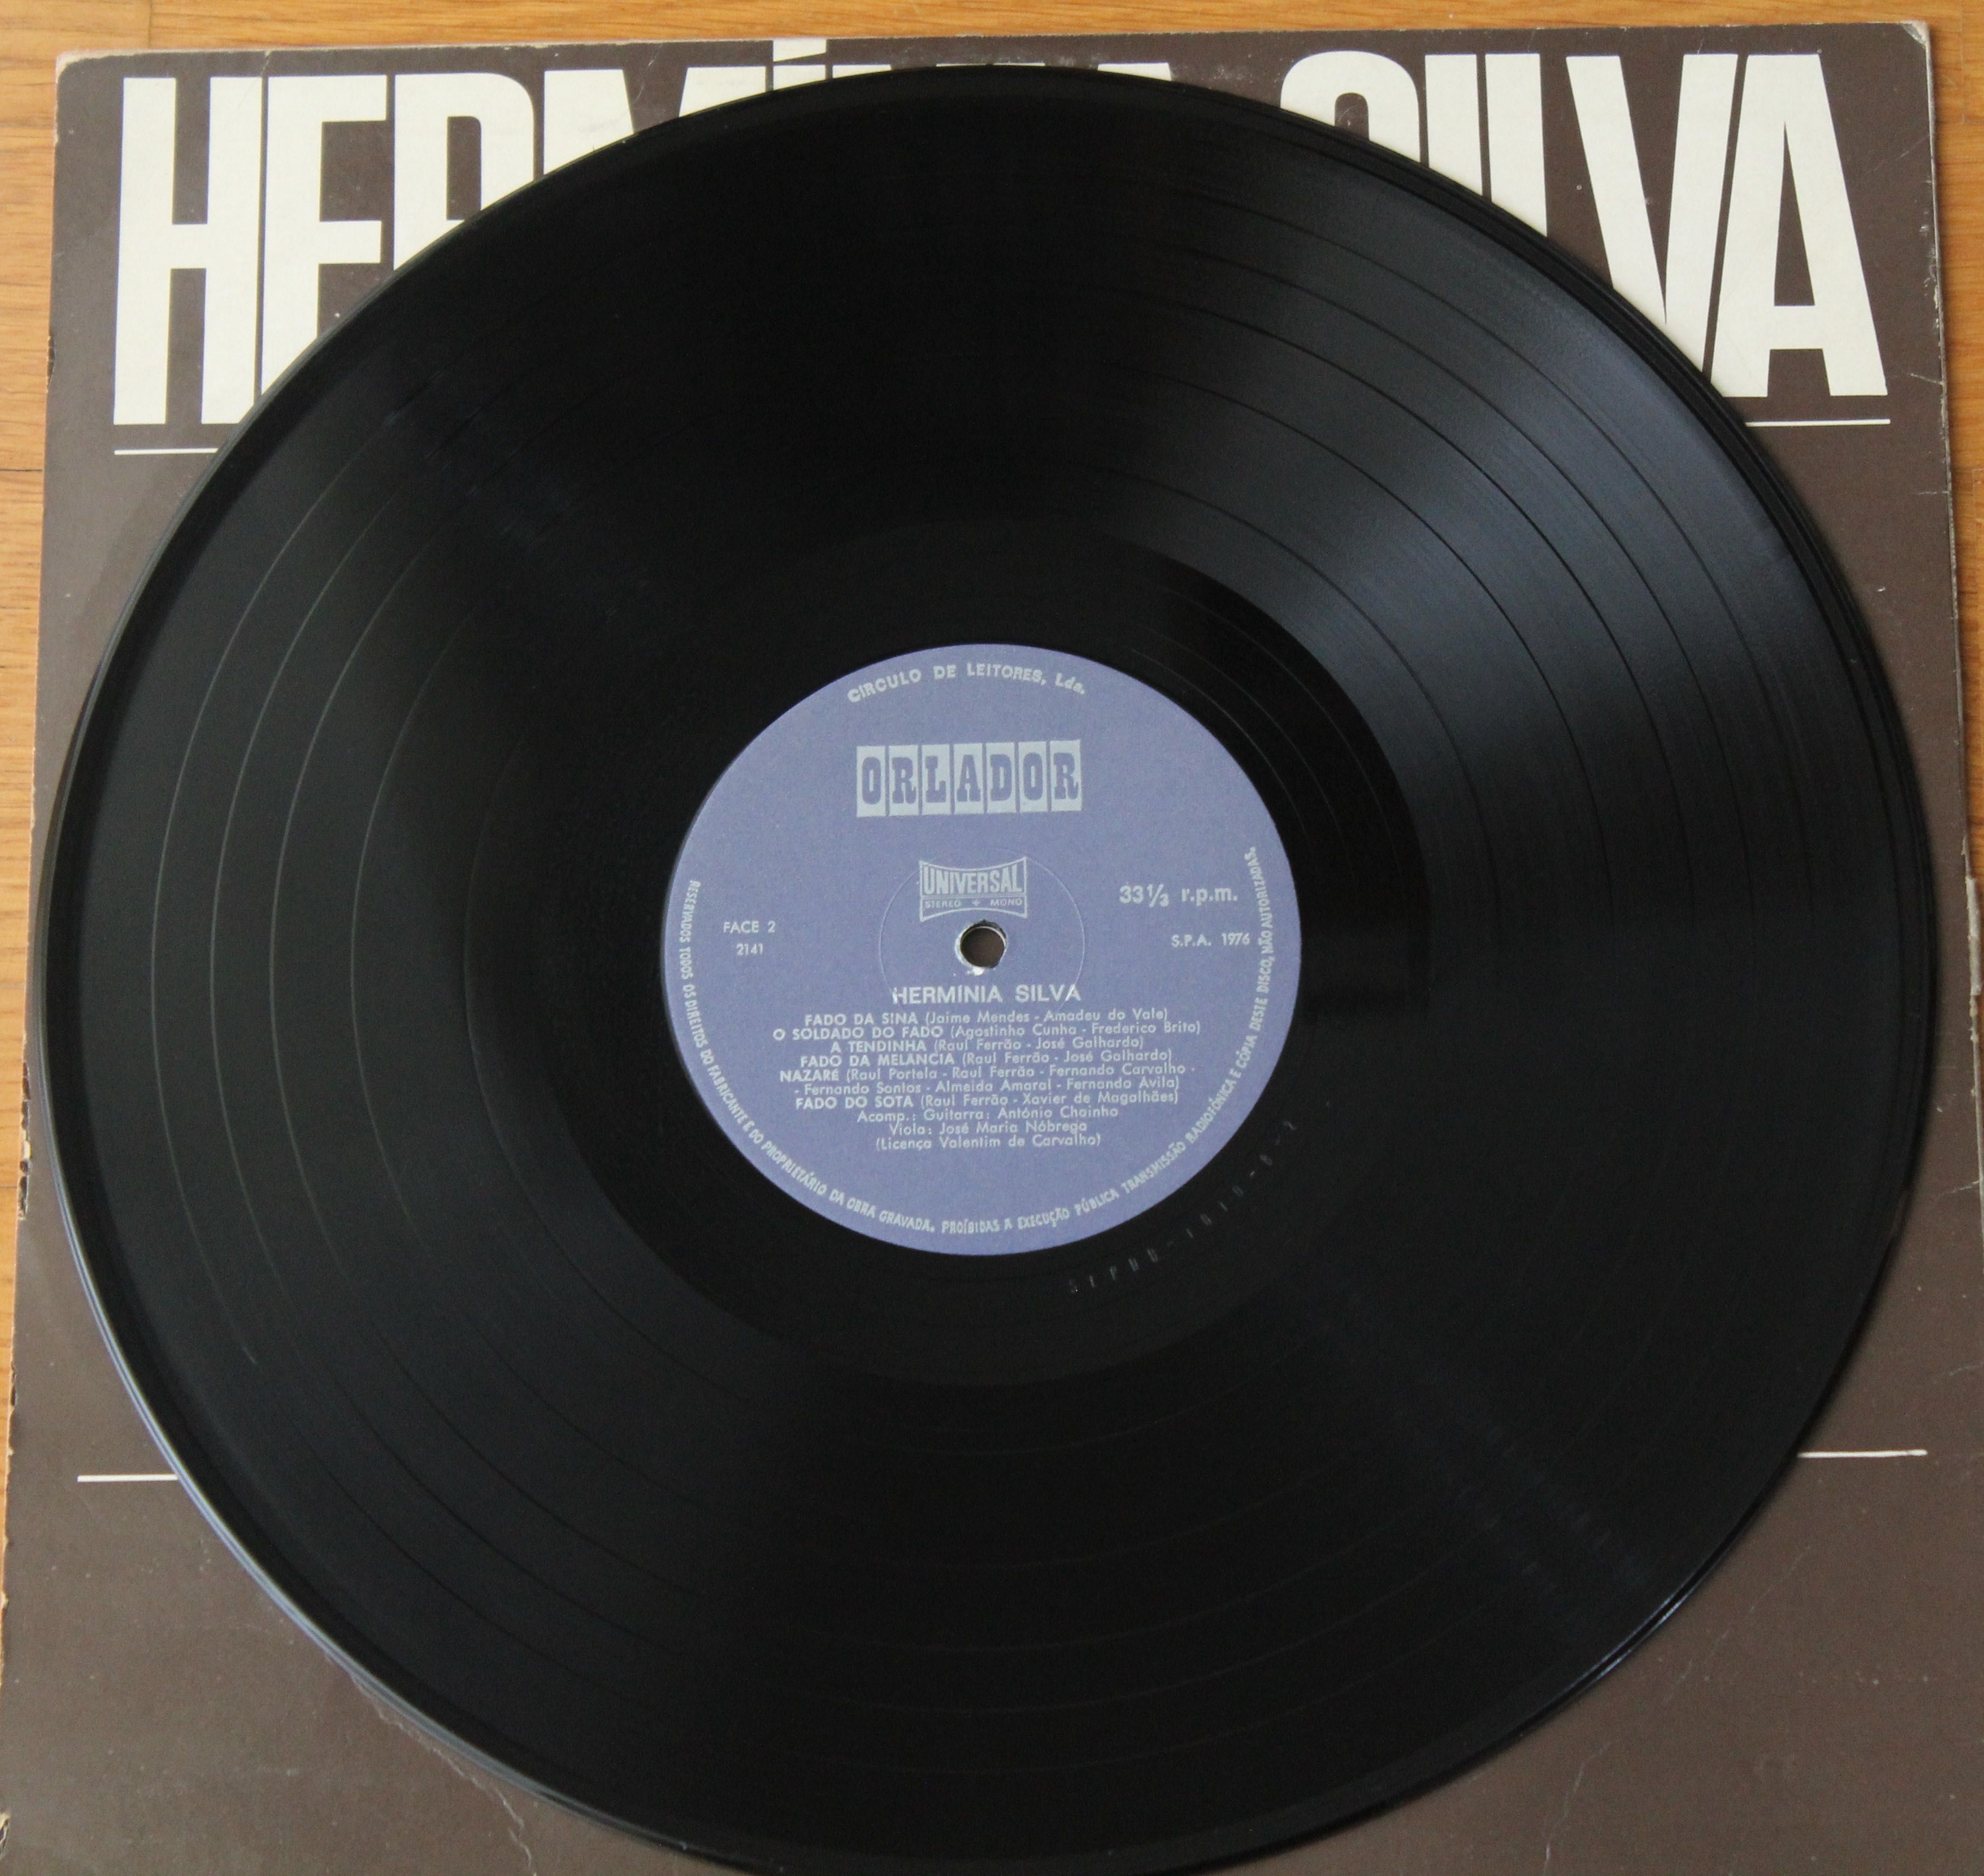 LP "Os Maiores Êxitos de Hermínia Silva" - Hermínia Silva, disco vinil